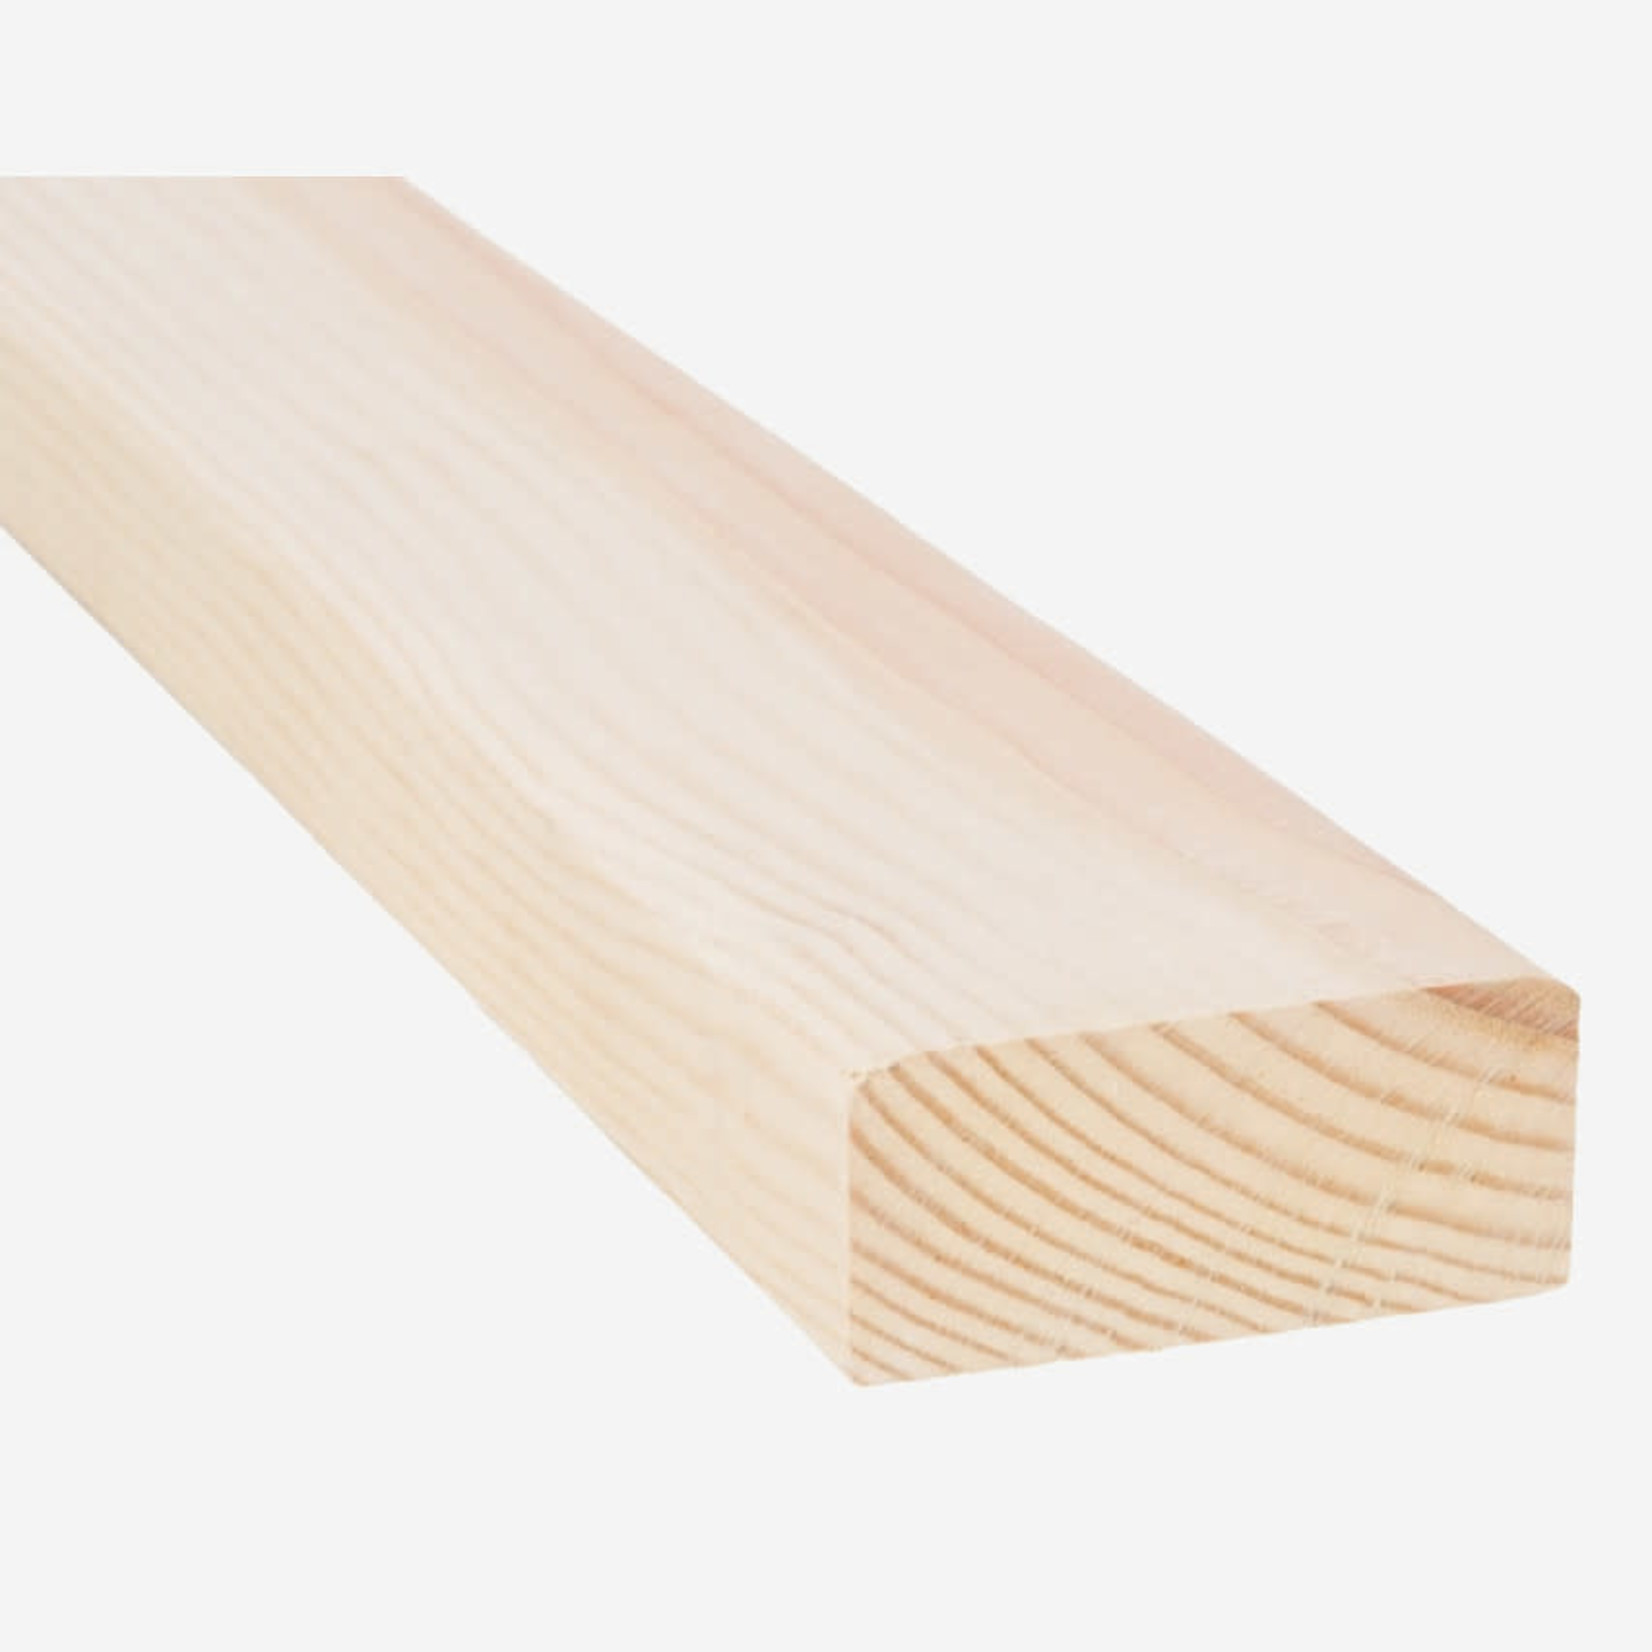 2 in. x 4 in. x 8 ft. Premium Douglas Fir Lumber